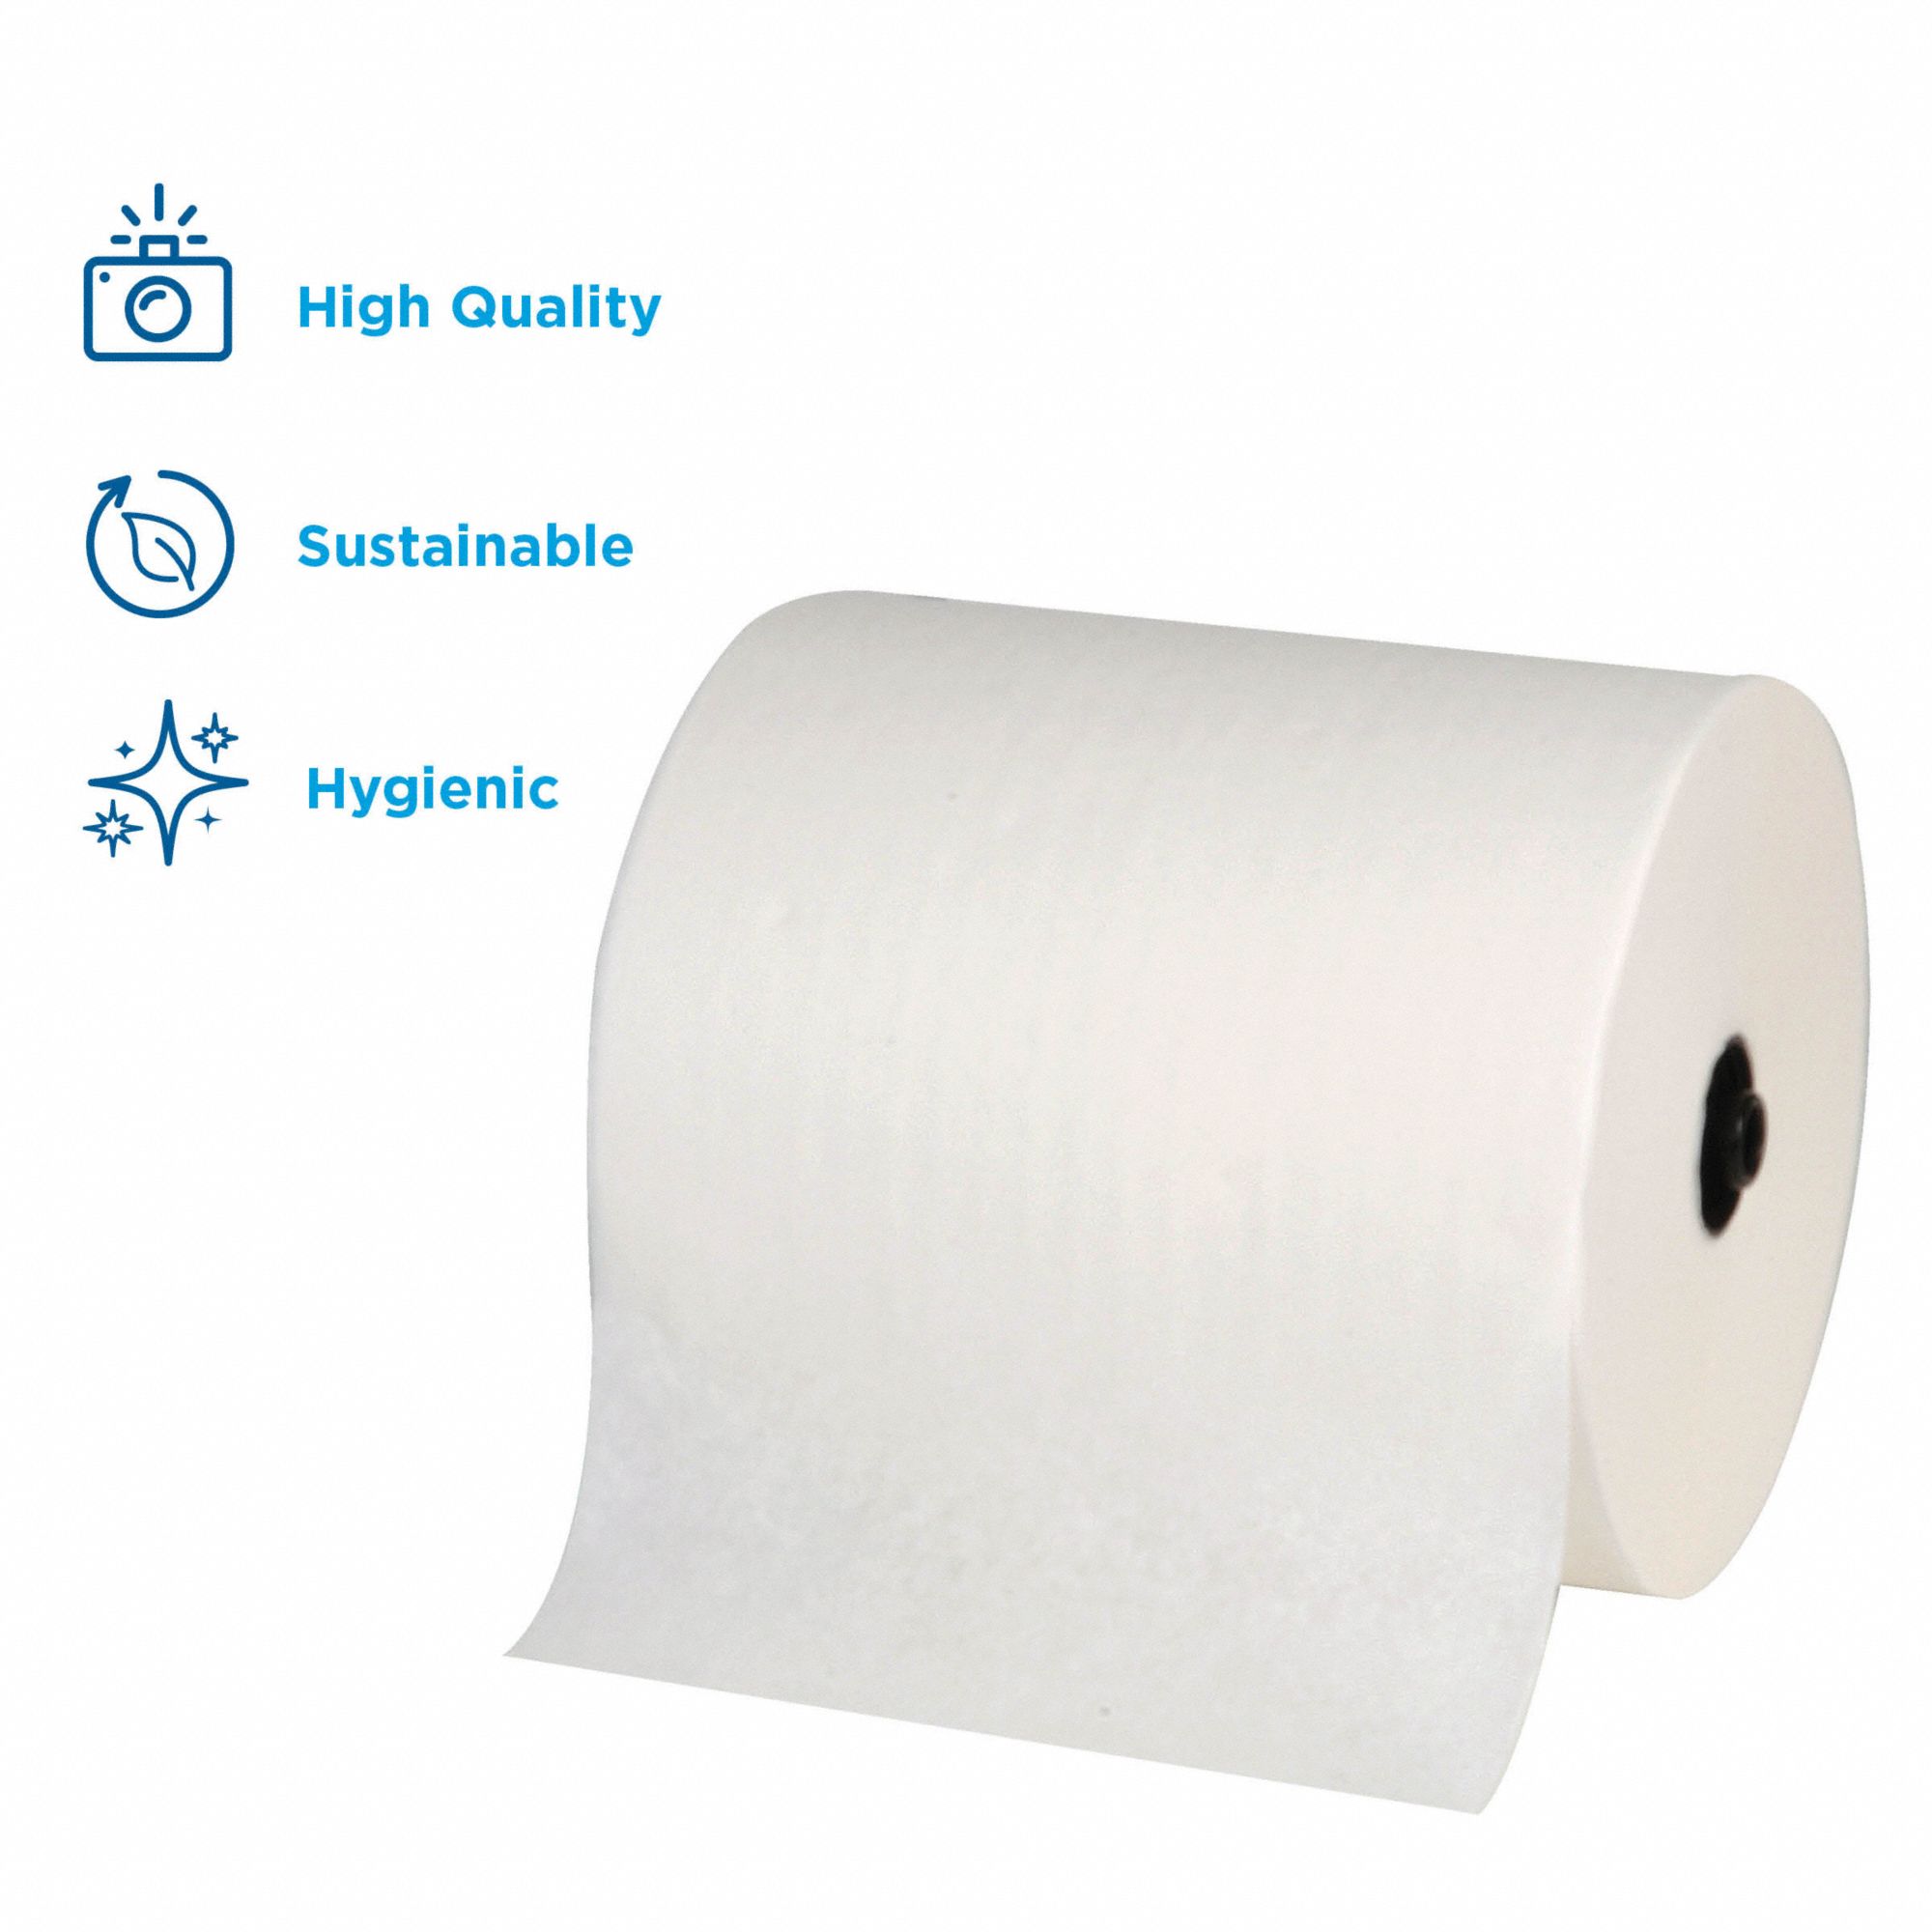 GEORGIA-PACIFIC Paper Towel Roll, enMotion(R) Flex, Hardwound, White ...